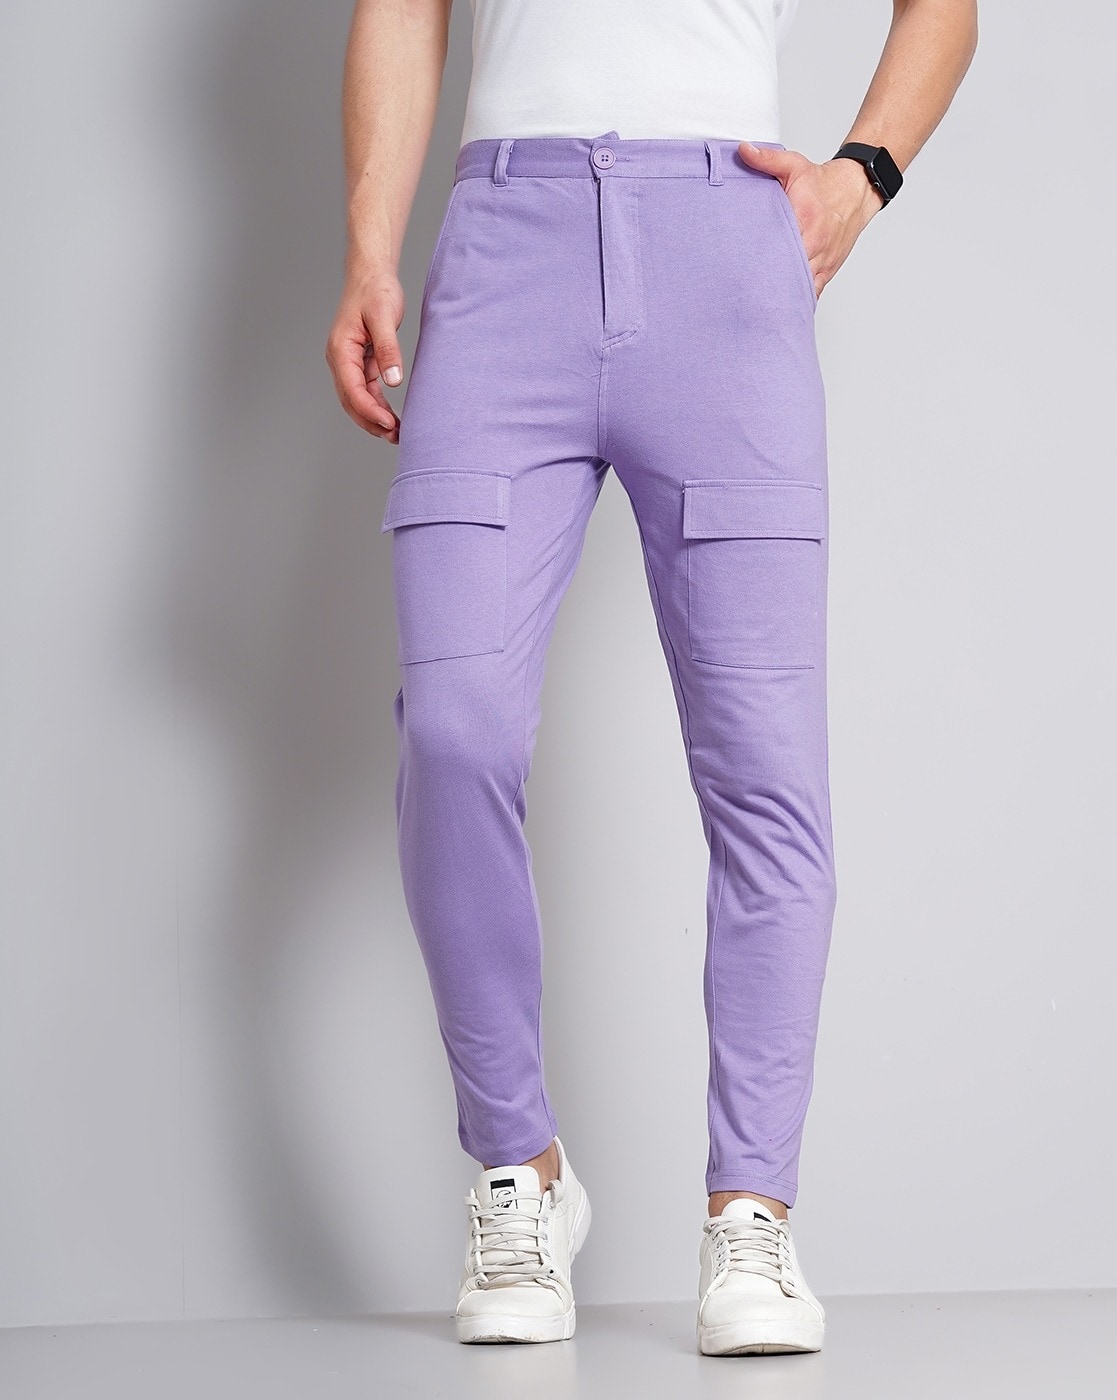 Black  Purple Cargo pants  Cargo pants men Cargo pants Hip hop cargo  pants